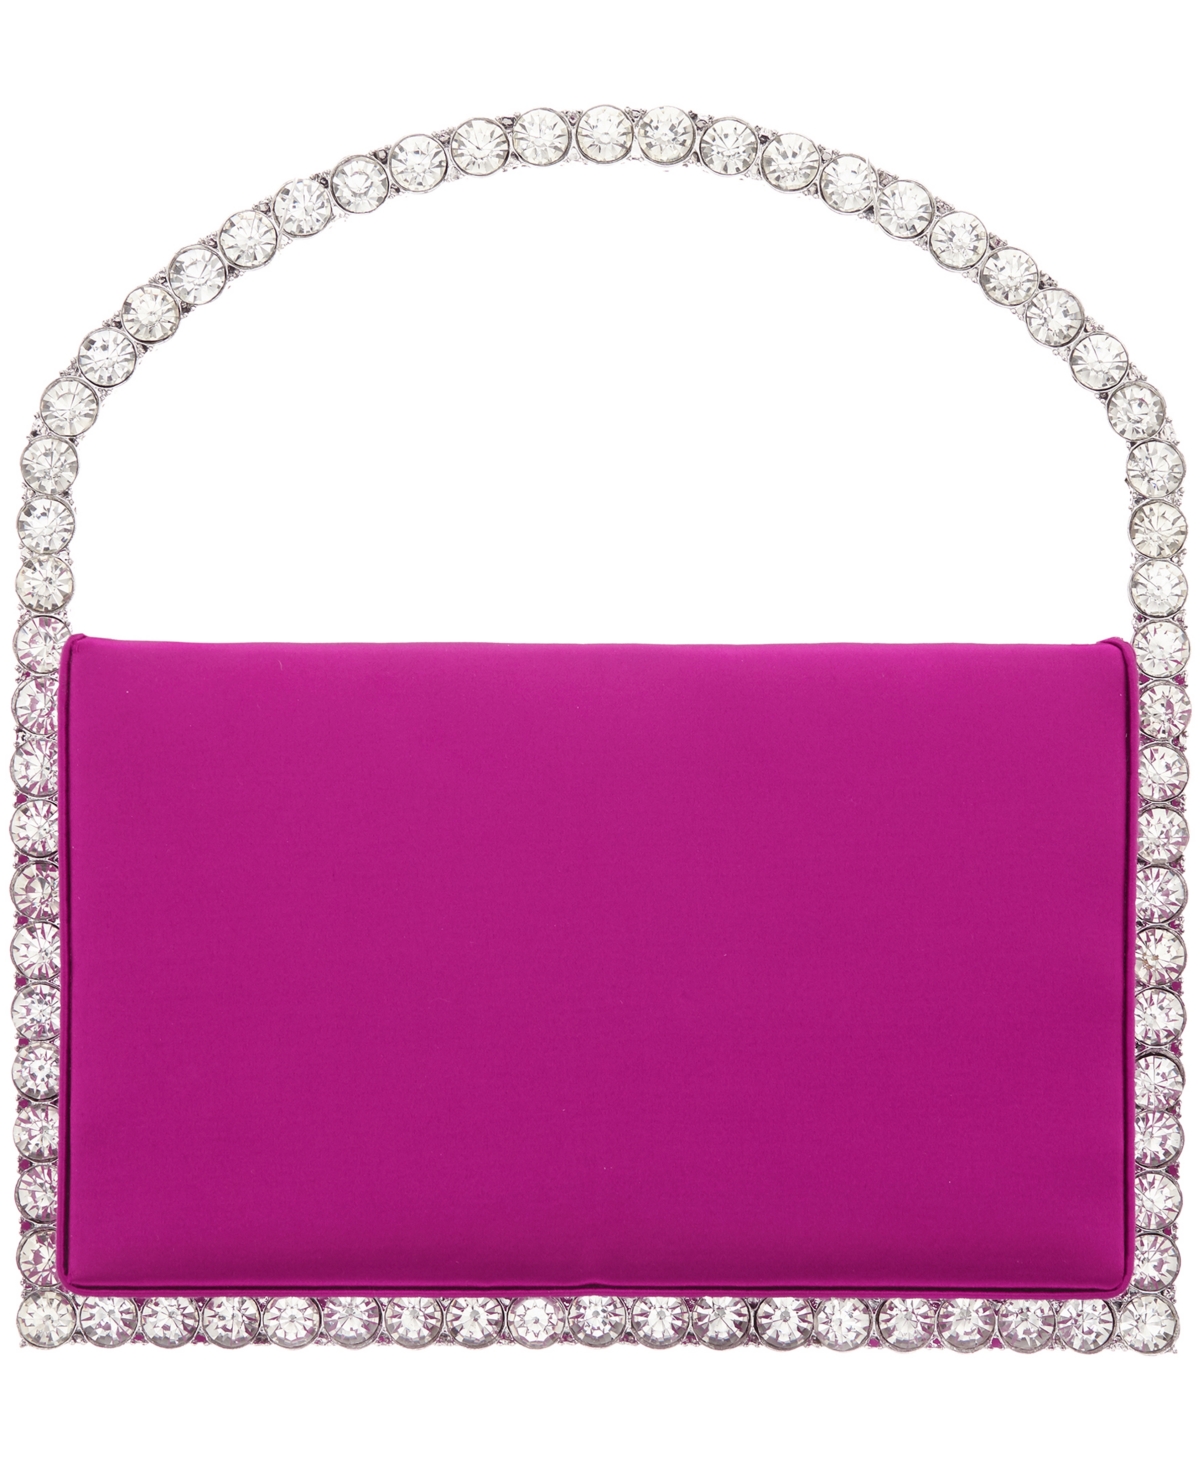 Nina Satin With Crystal Frame Bag In Parfait Pink